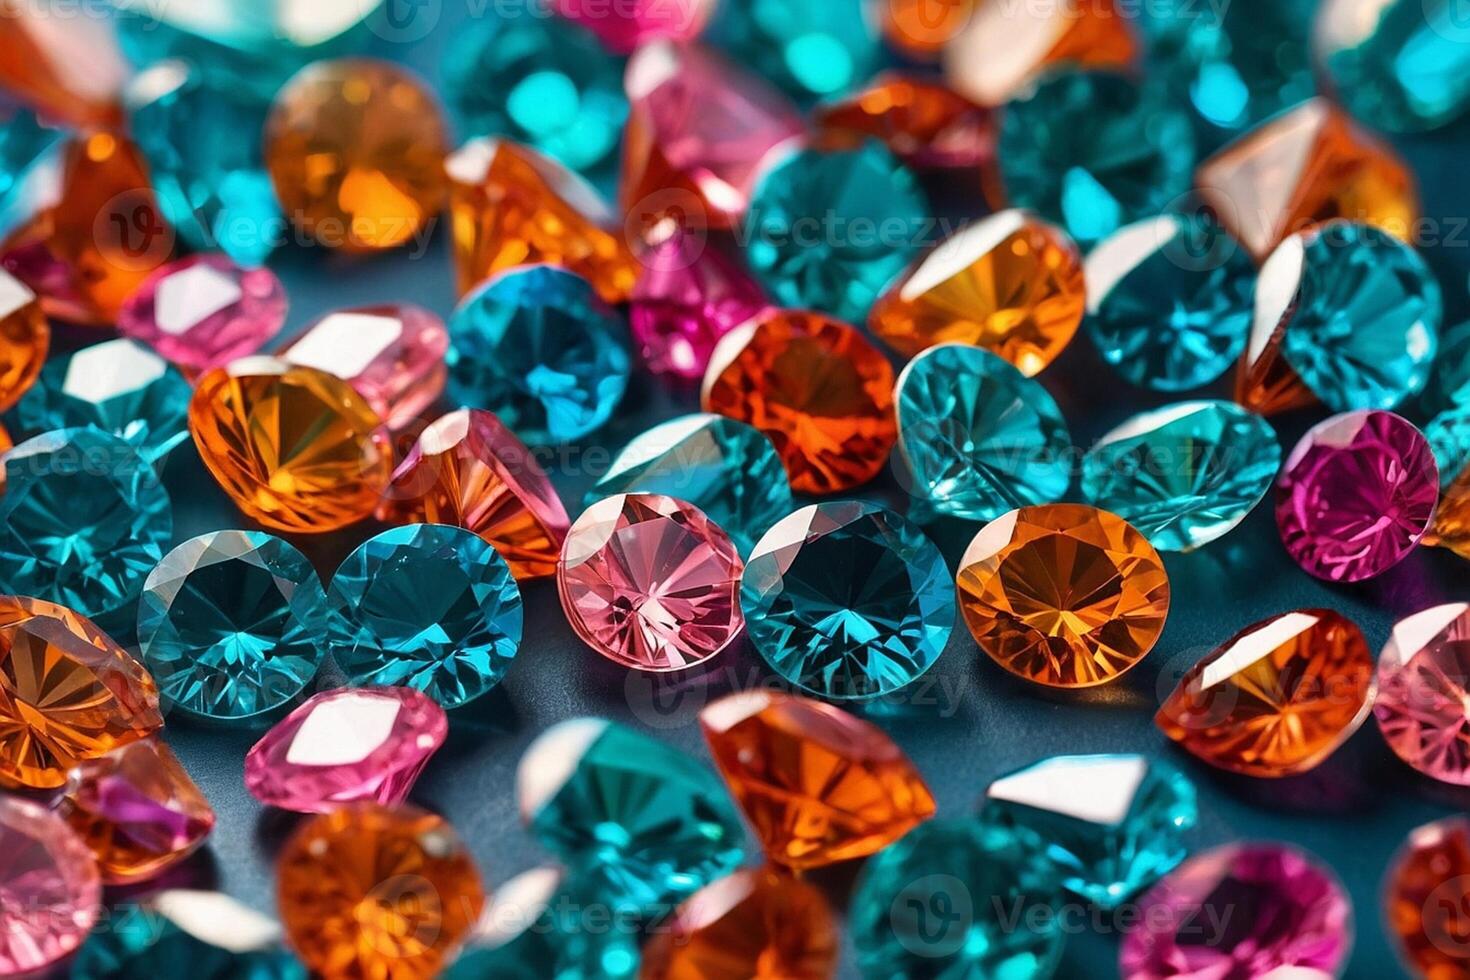 colorful diamonds on a dark background photo